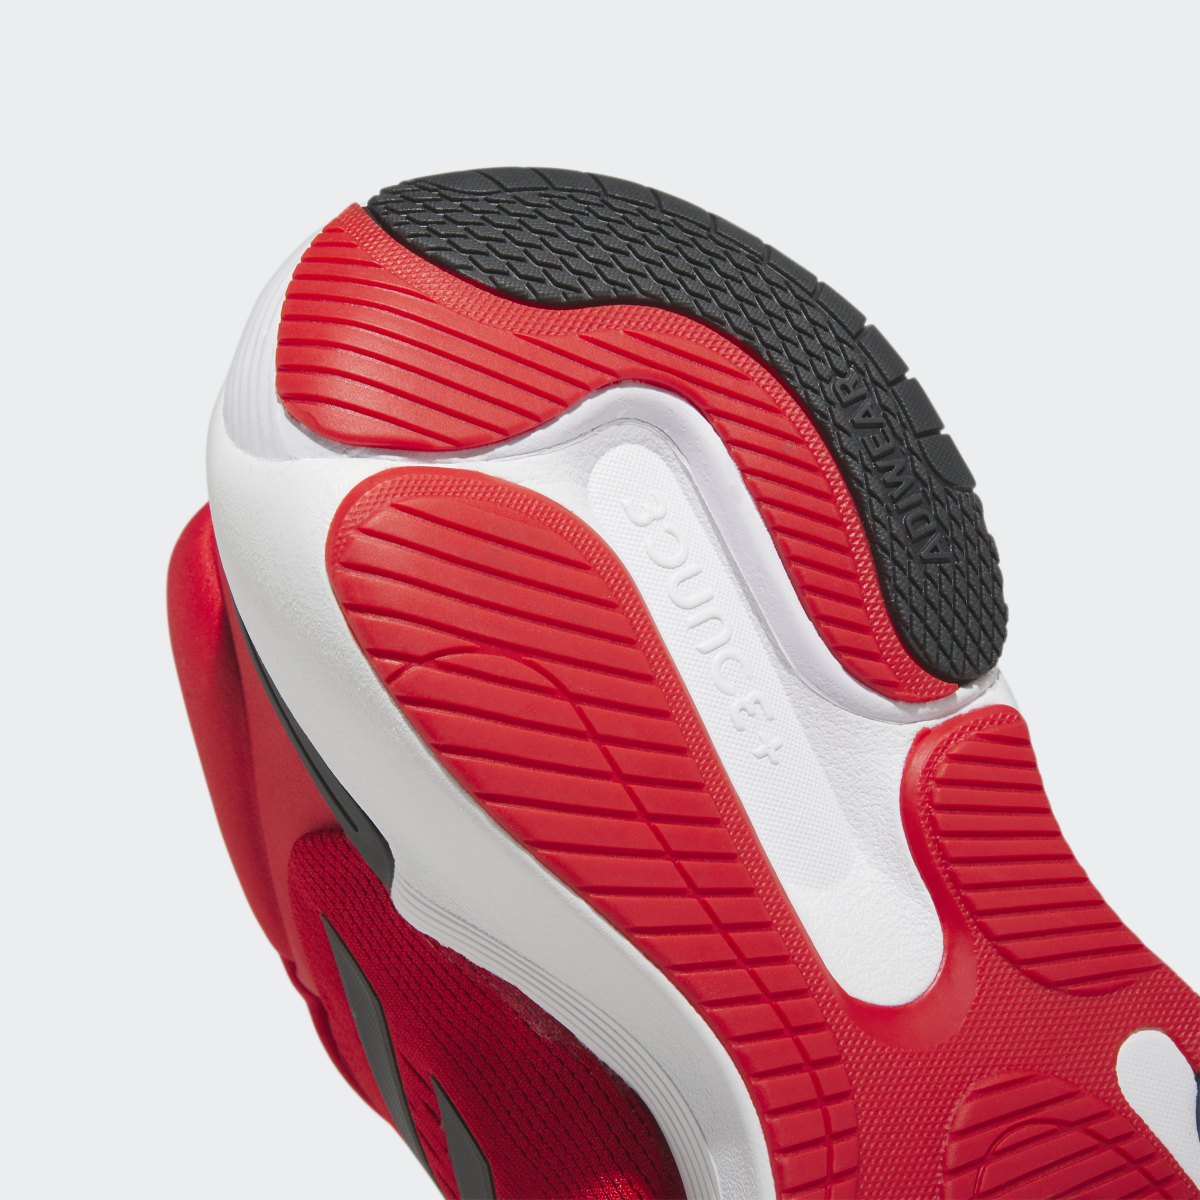 Adidas Response Super 3.0 Shoes. 10